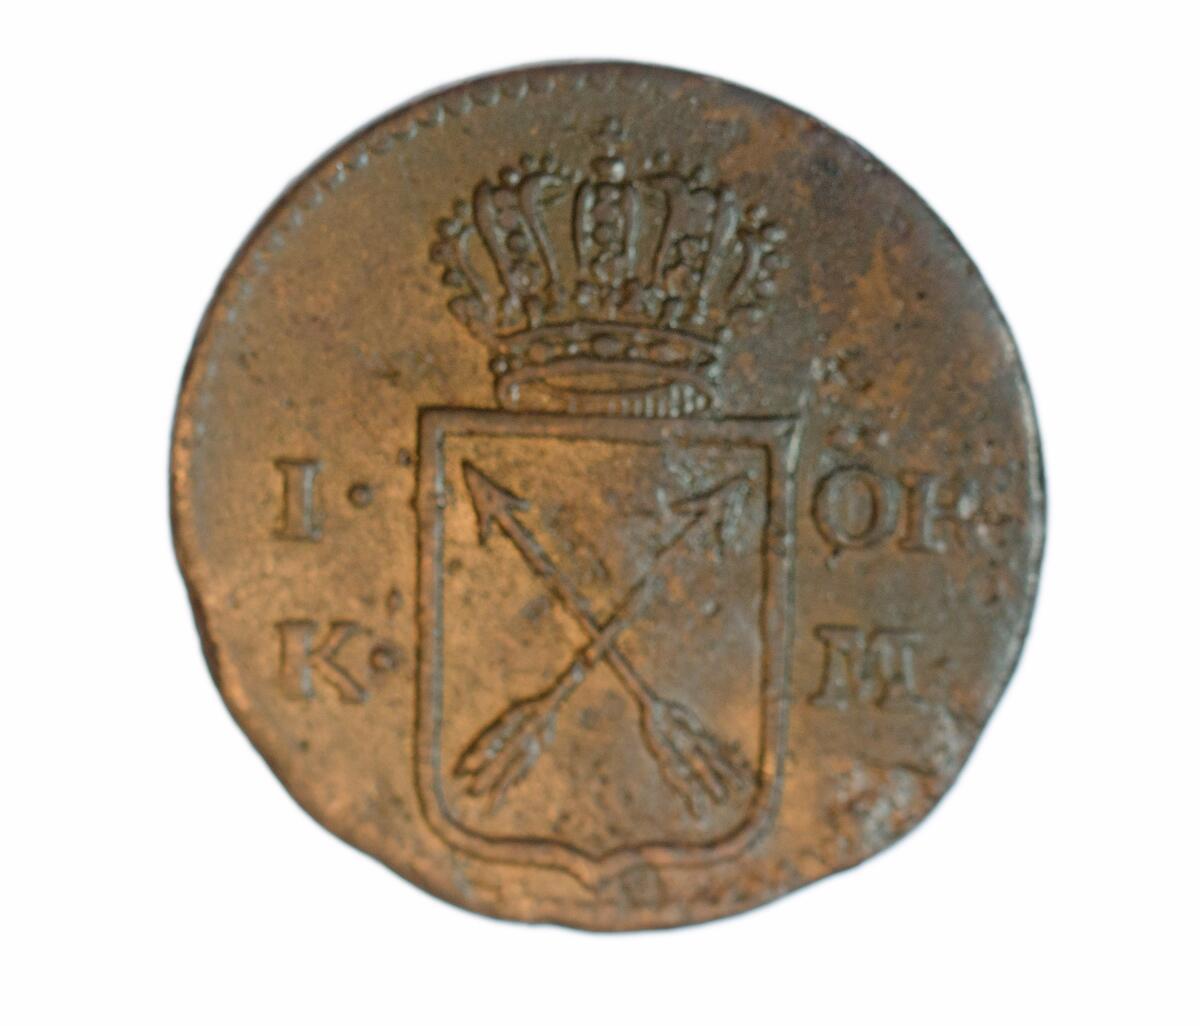 Mynt, 1 öre k.m. från Fredrik I tid, 1750.